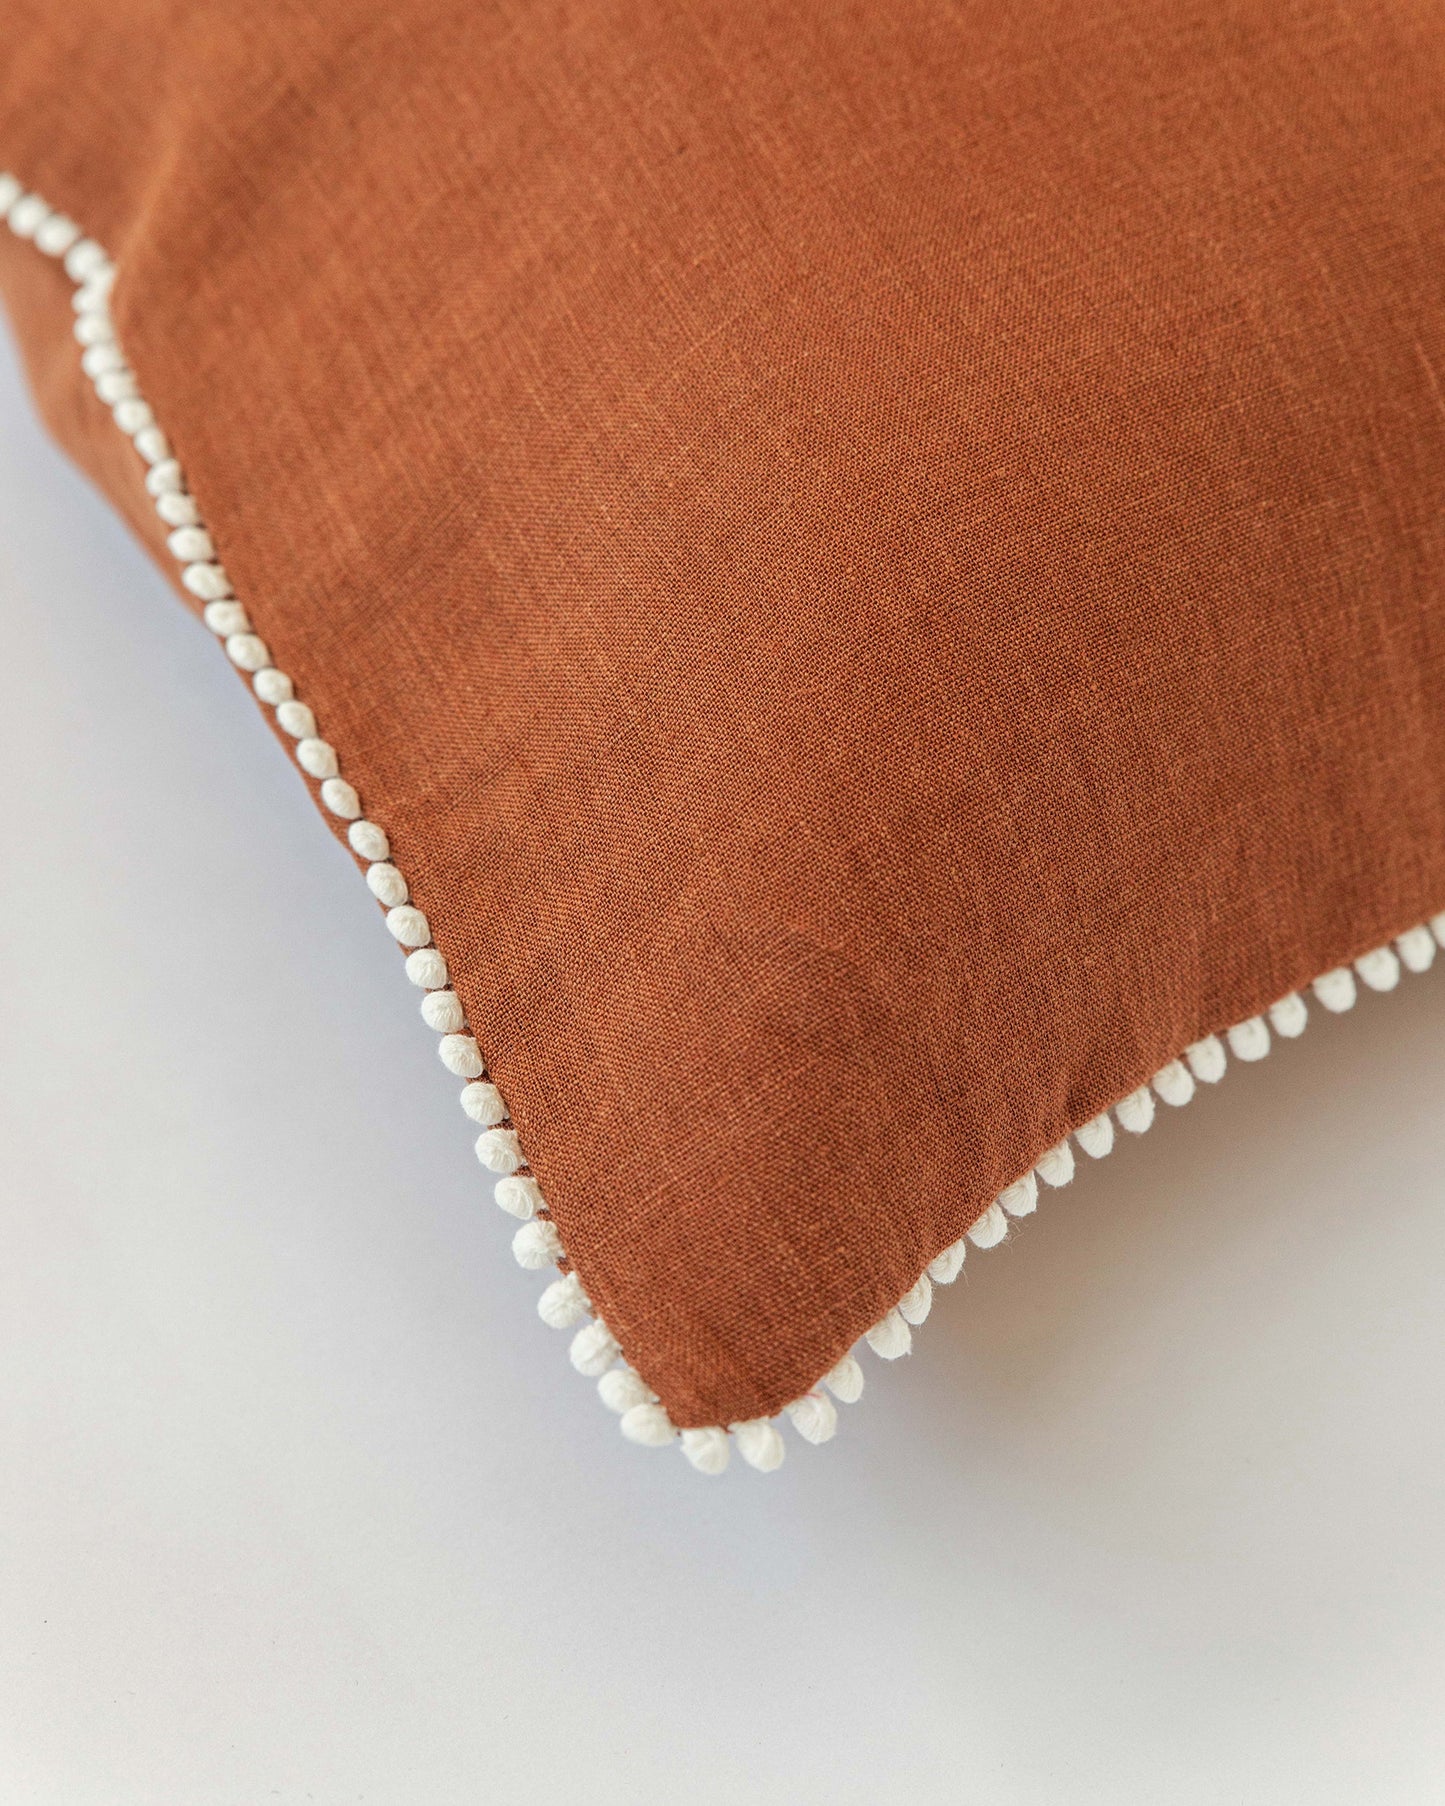 Pom pom trim linen pillowcase in Cinnamon - MagicLinen